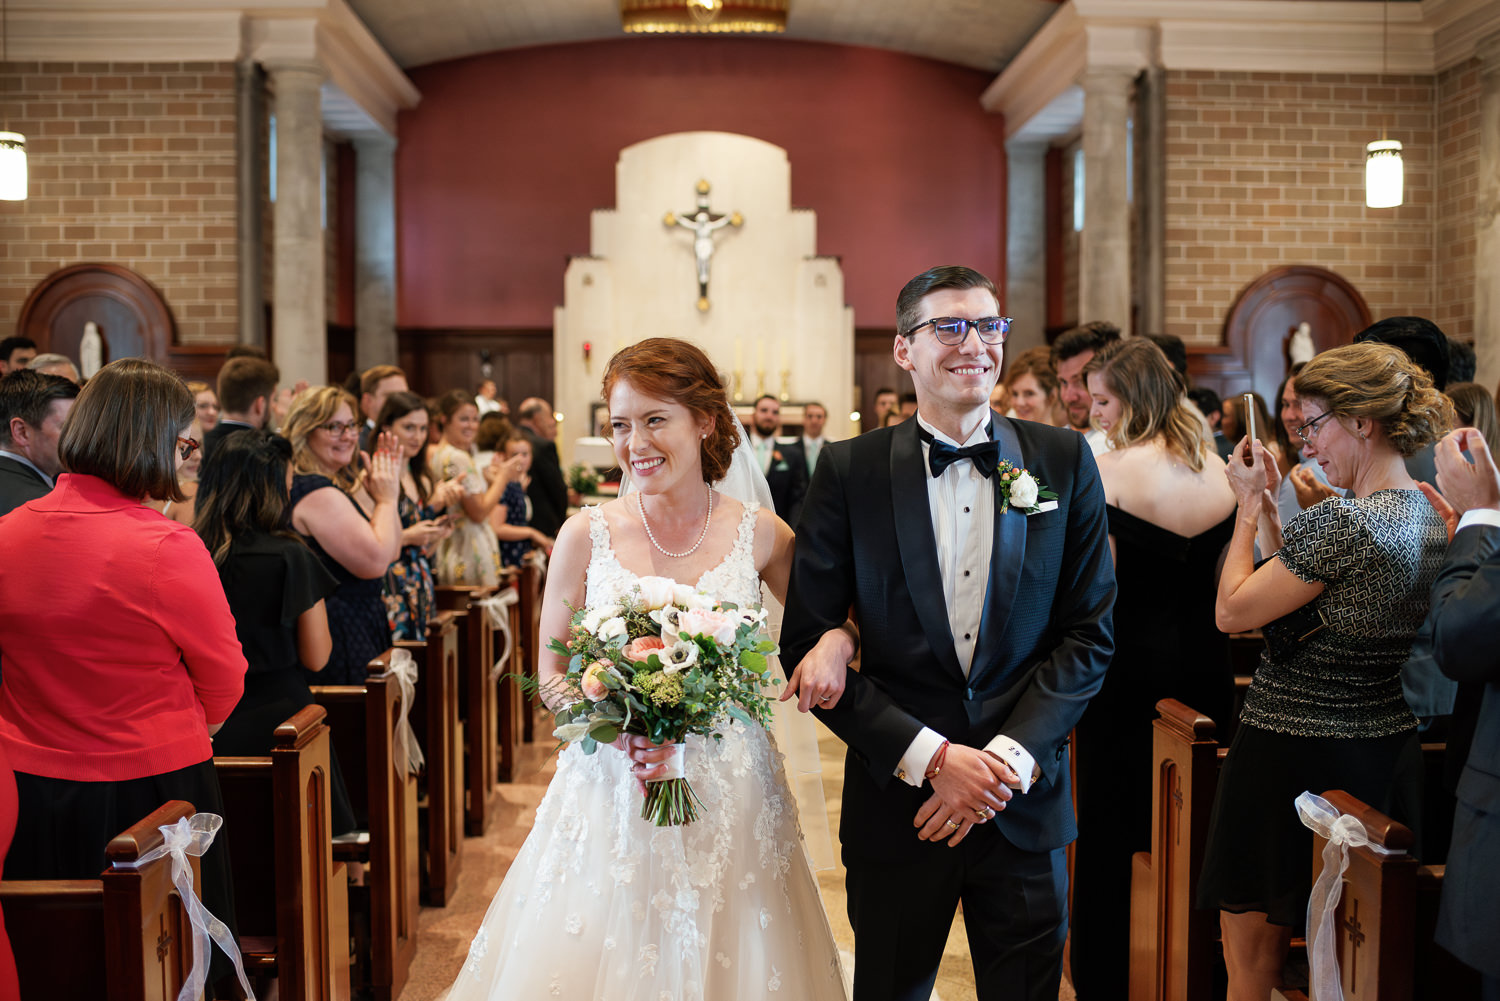 church wedding ceremony in halifax